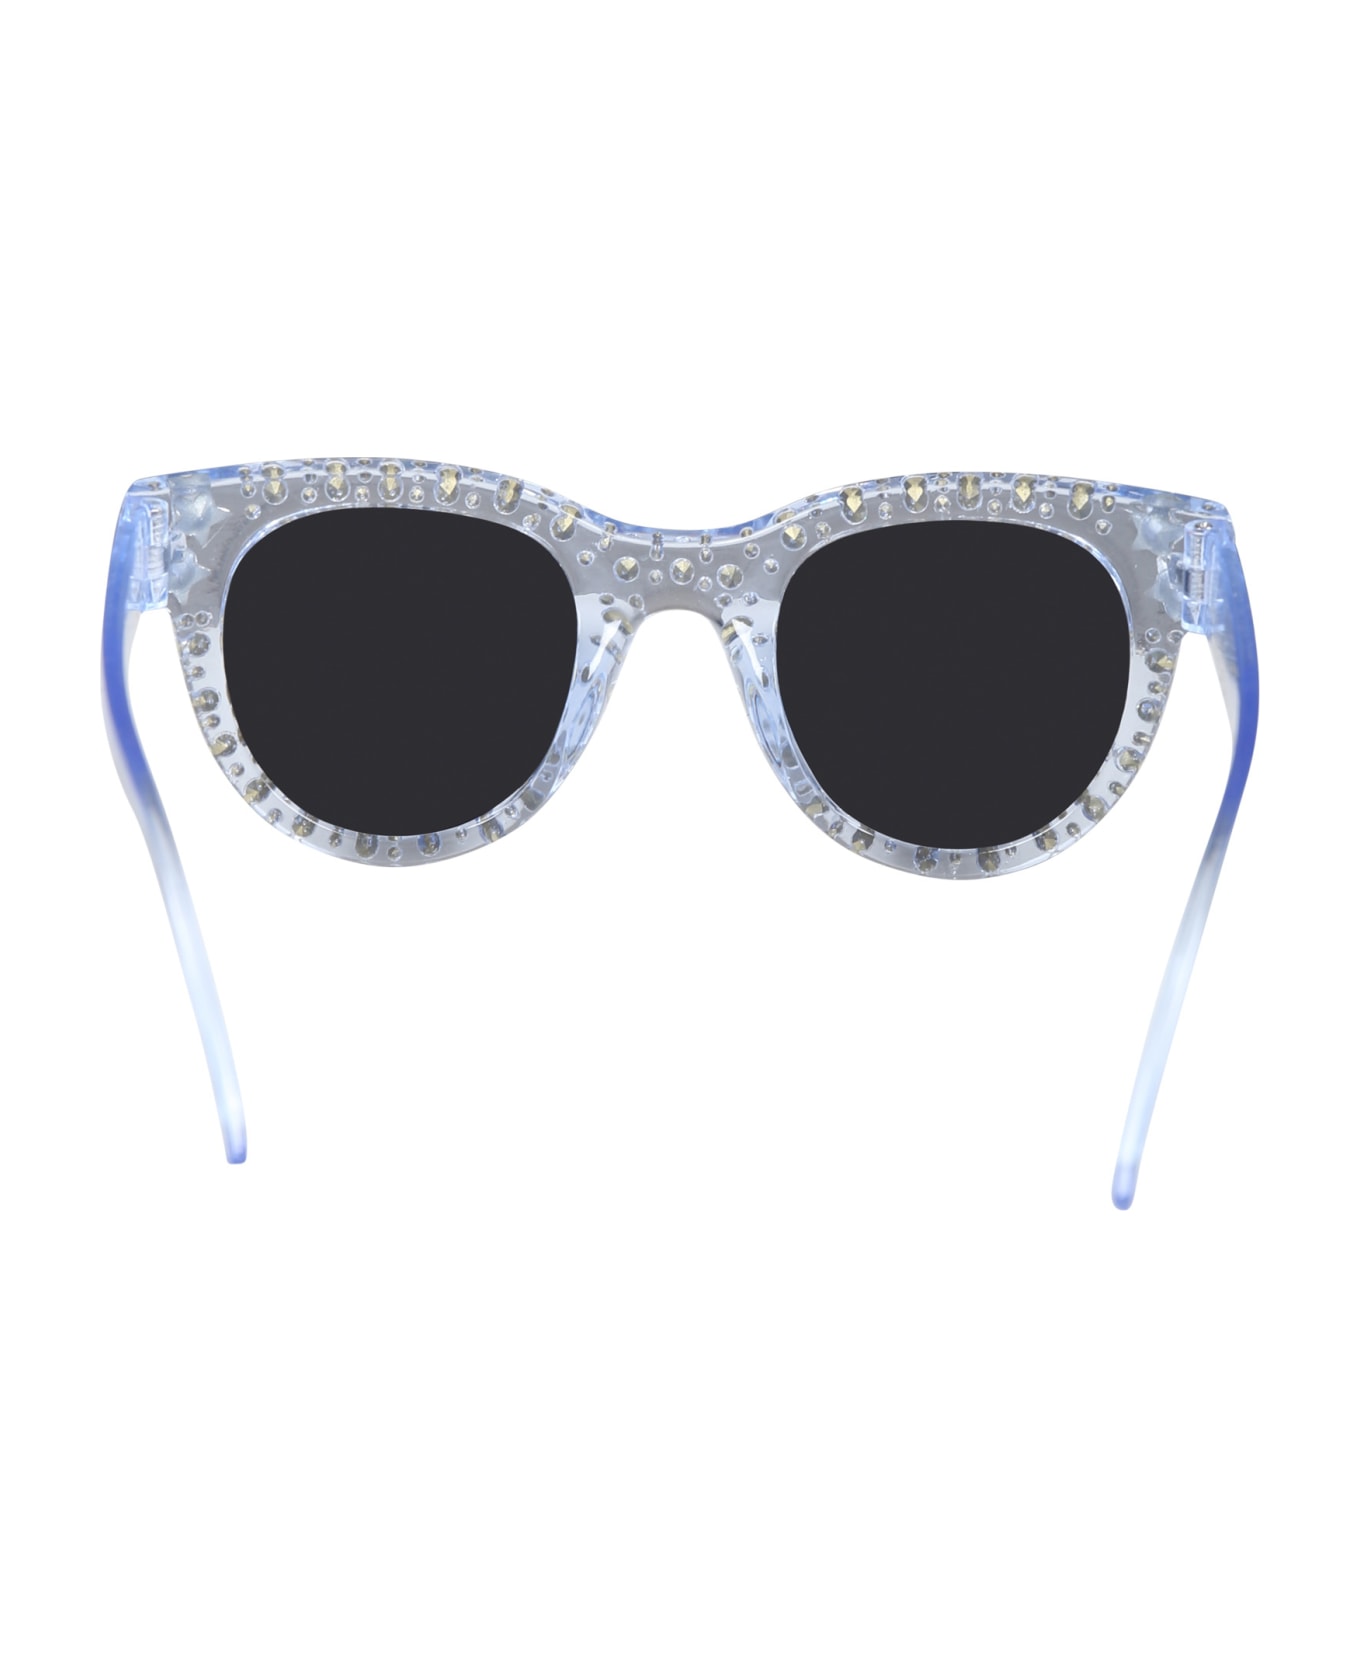 Monnalisa Sky Blue Sunglasses For Girl - Light Blue アクセサリー＆ギフト